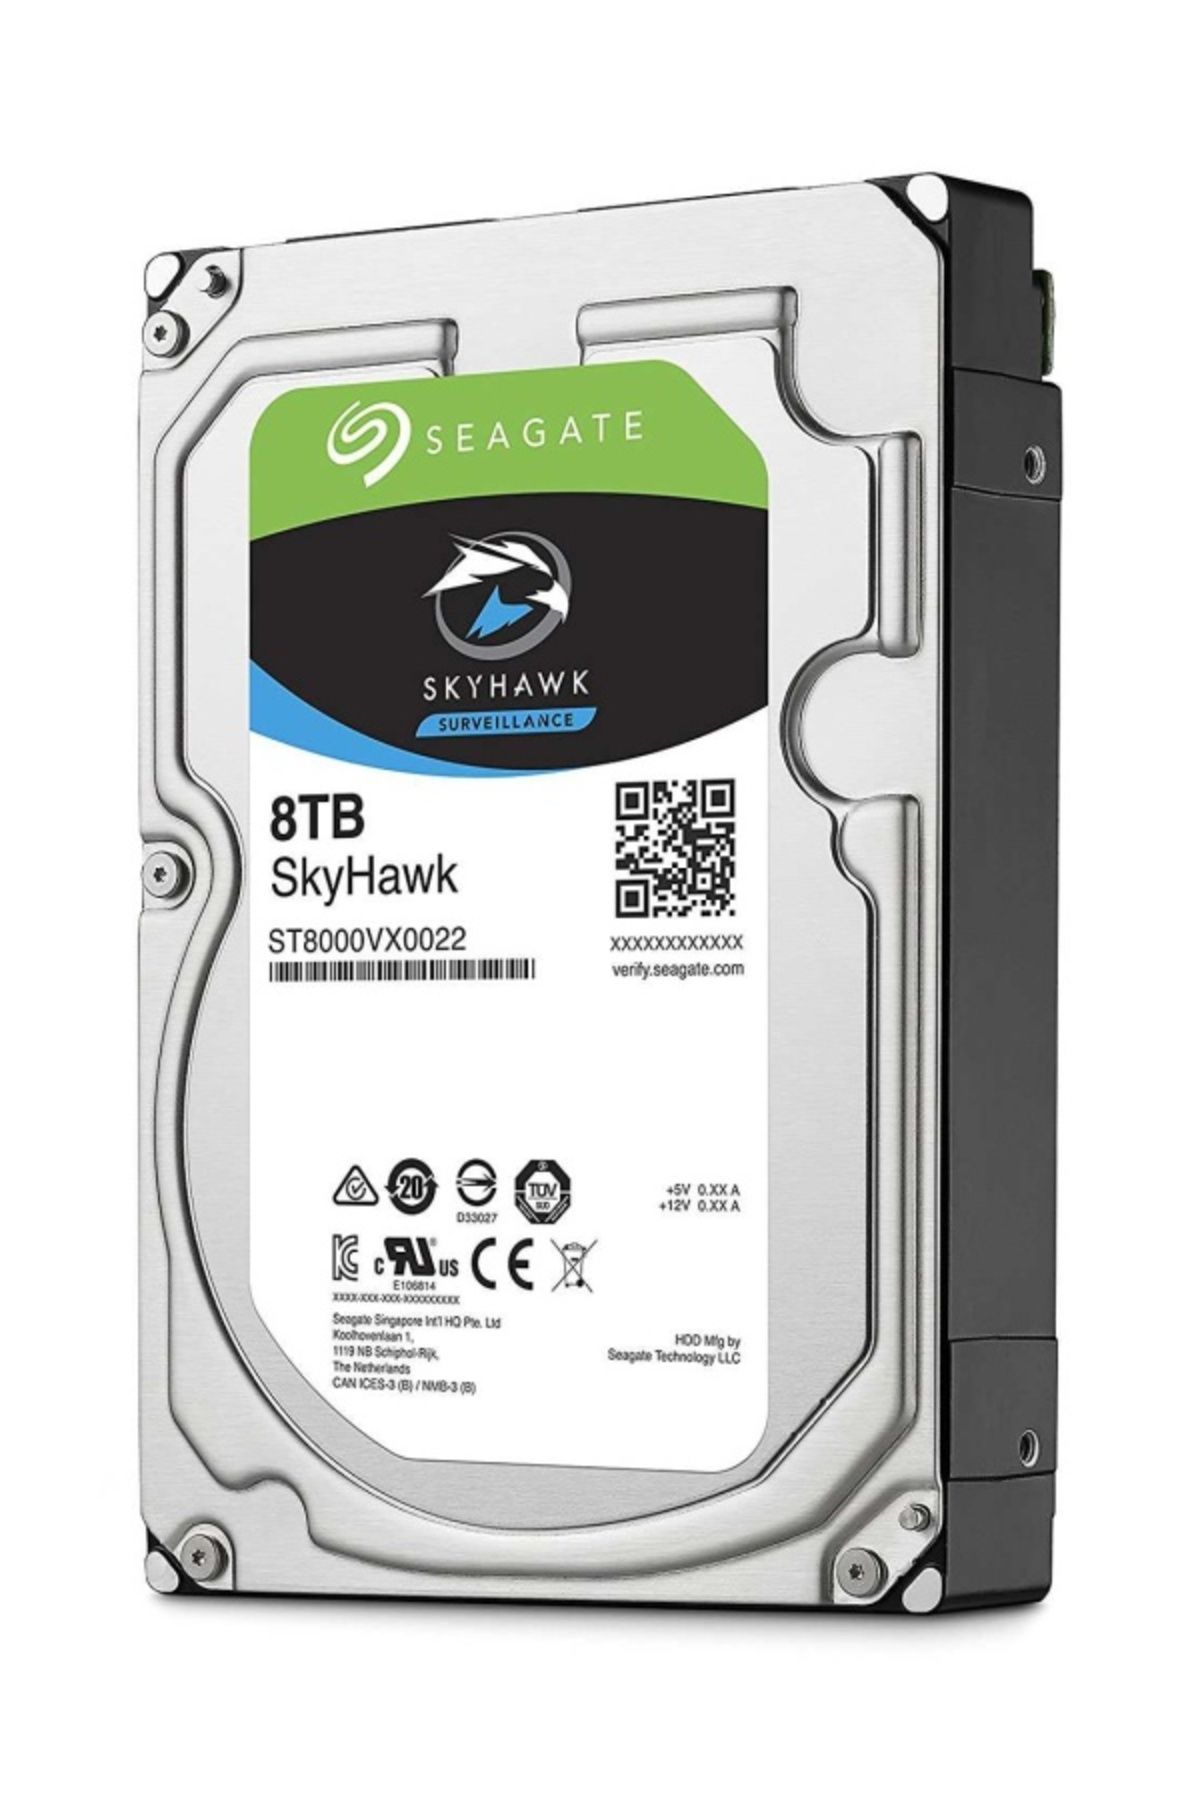 Seagate 8tb St8000vx0022 Skyhawk 3.5' 7200rpm 256mb Harddisk Güvenlik Diski (İTHALAT)